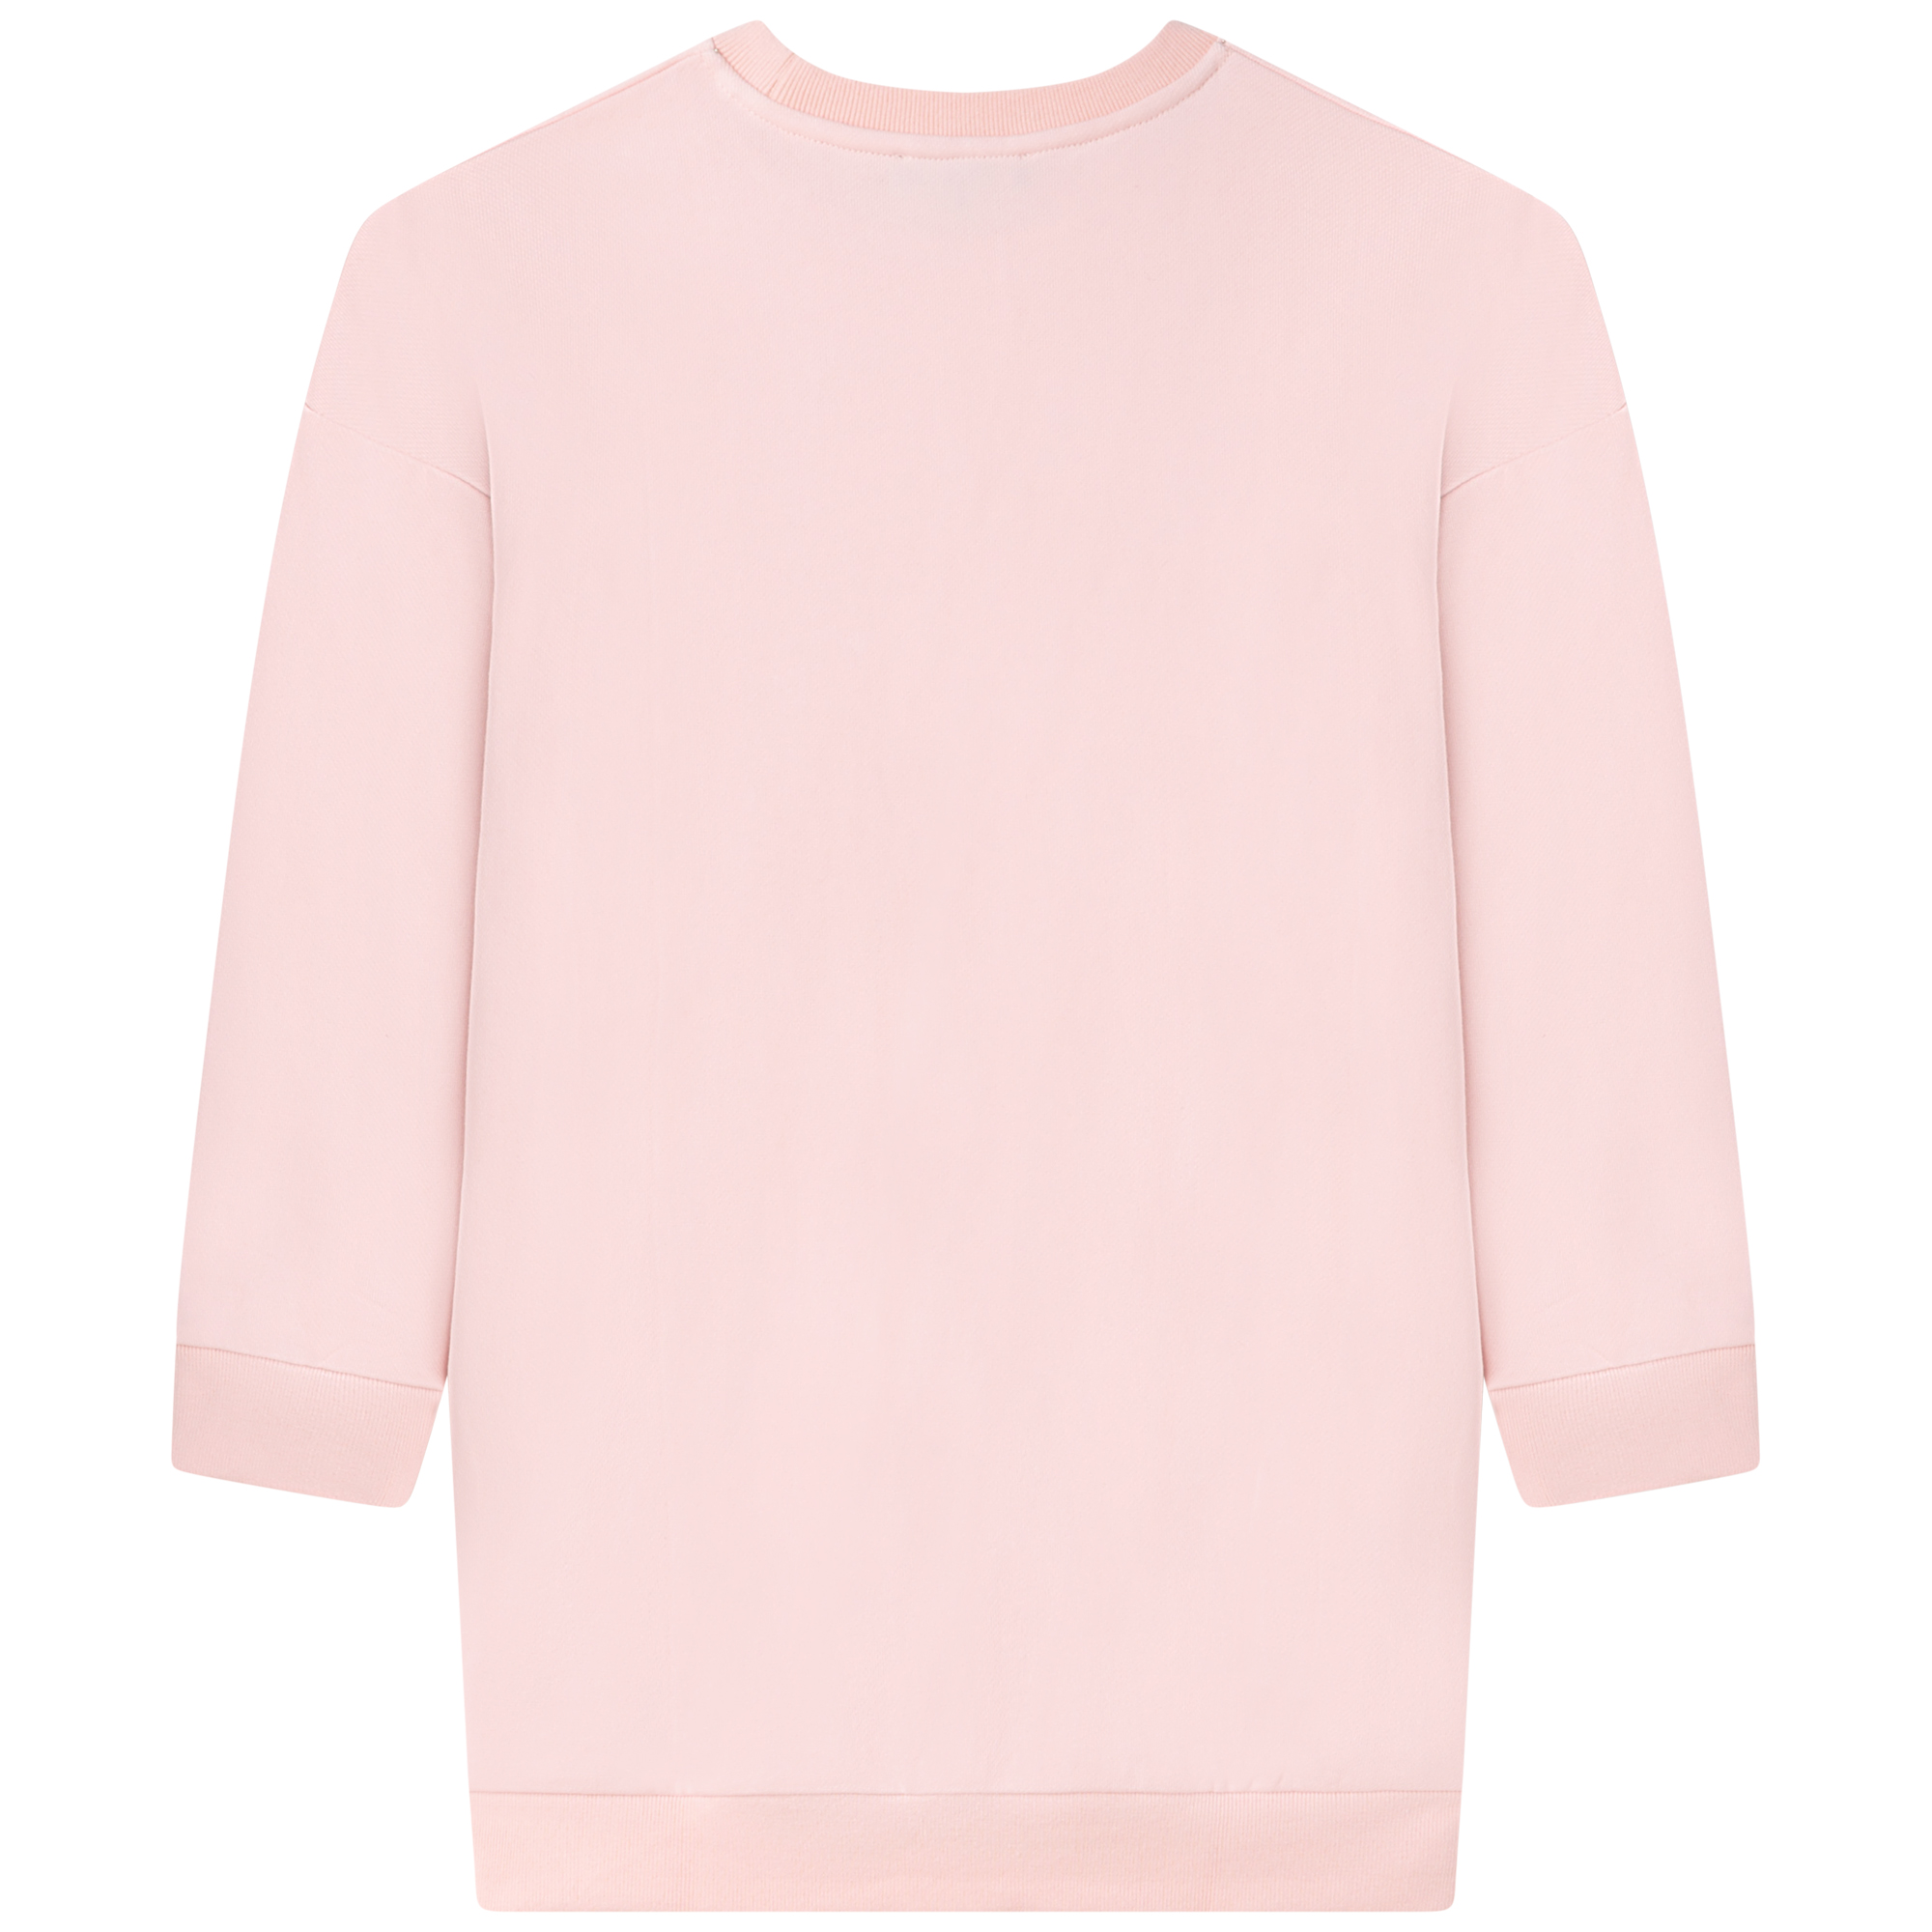 Long-sleeved sweatshirt dress DKNY for GIRL